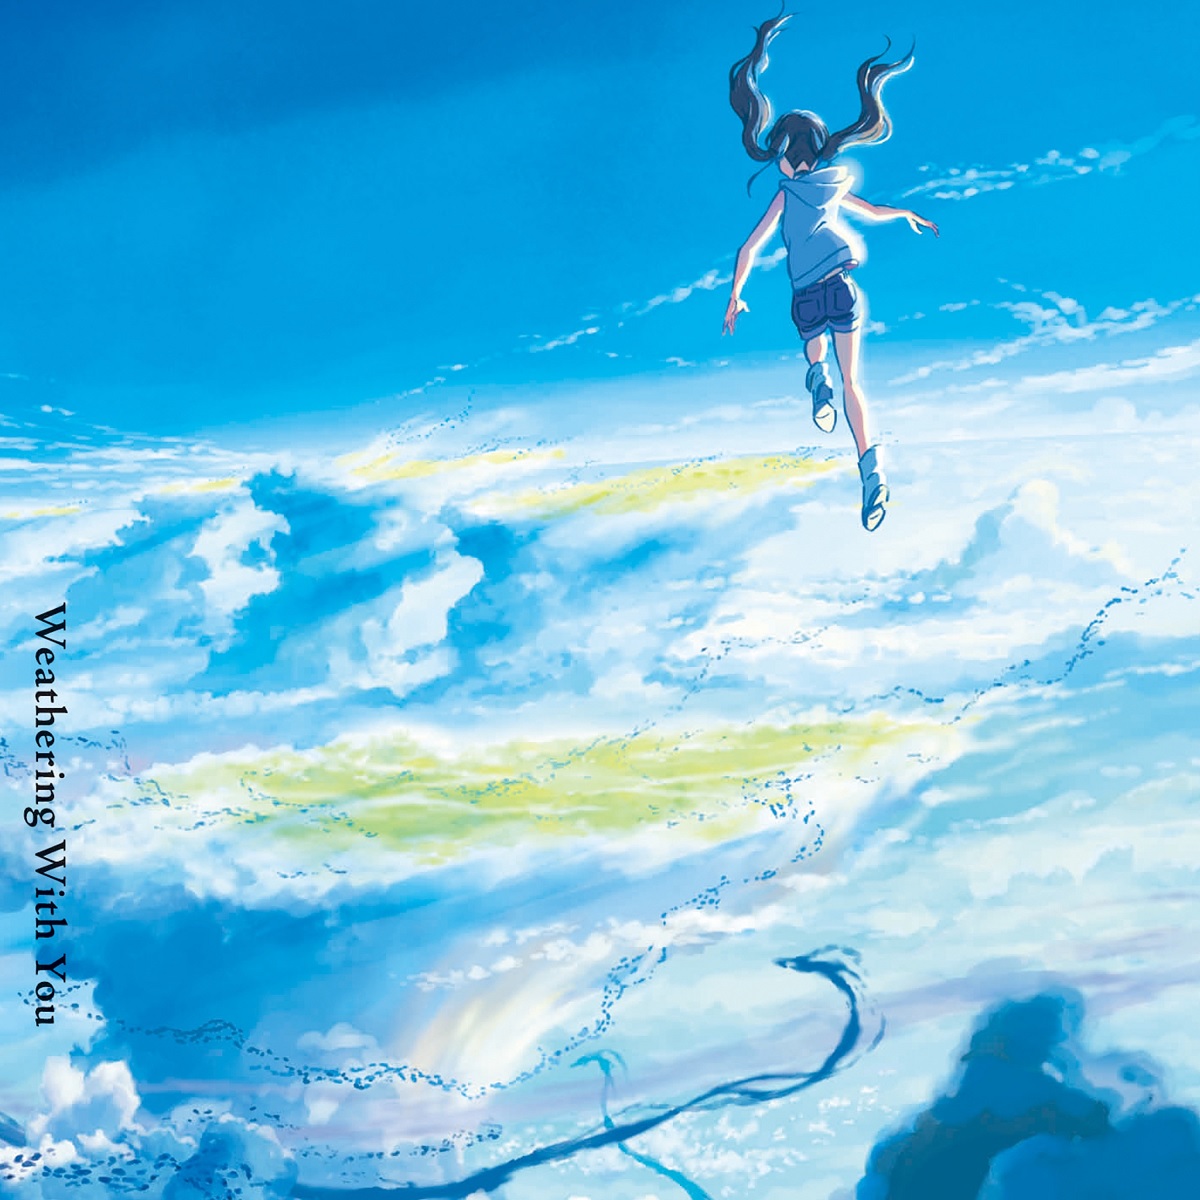 Cover art for『RADWIMPS - Daijoubu (Movie edit)』from the release『Tenki no Ko』